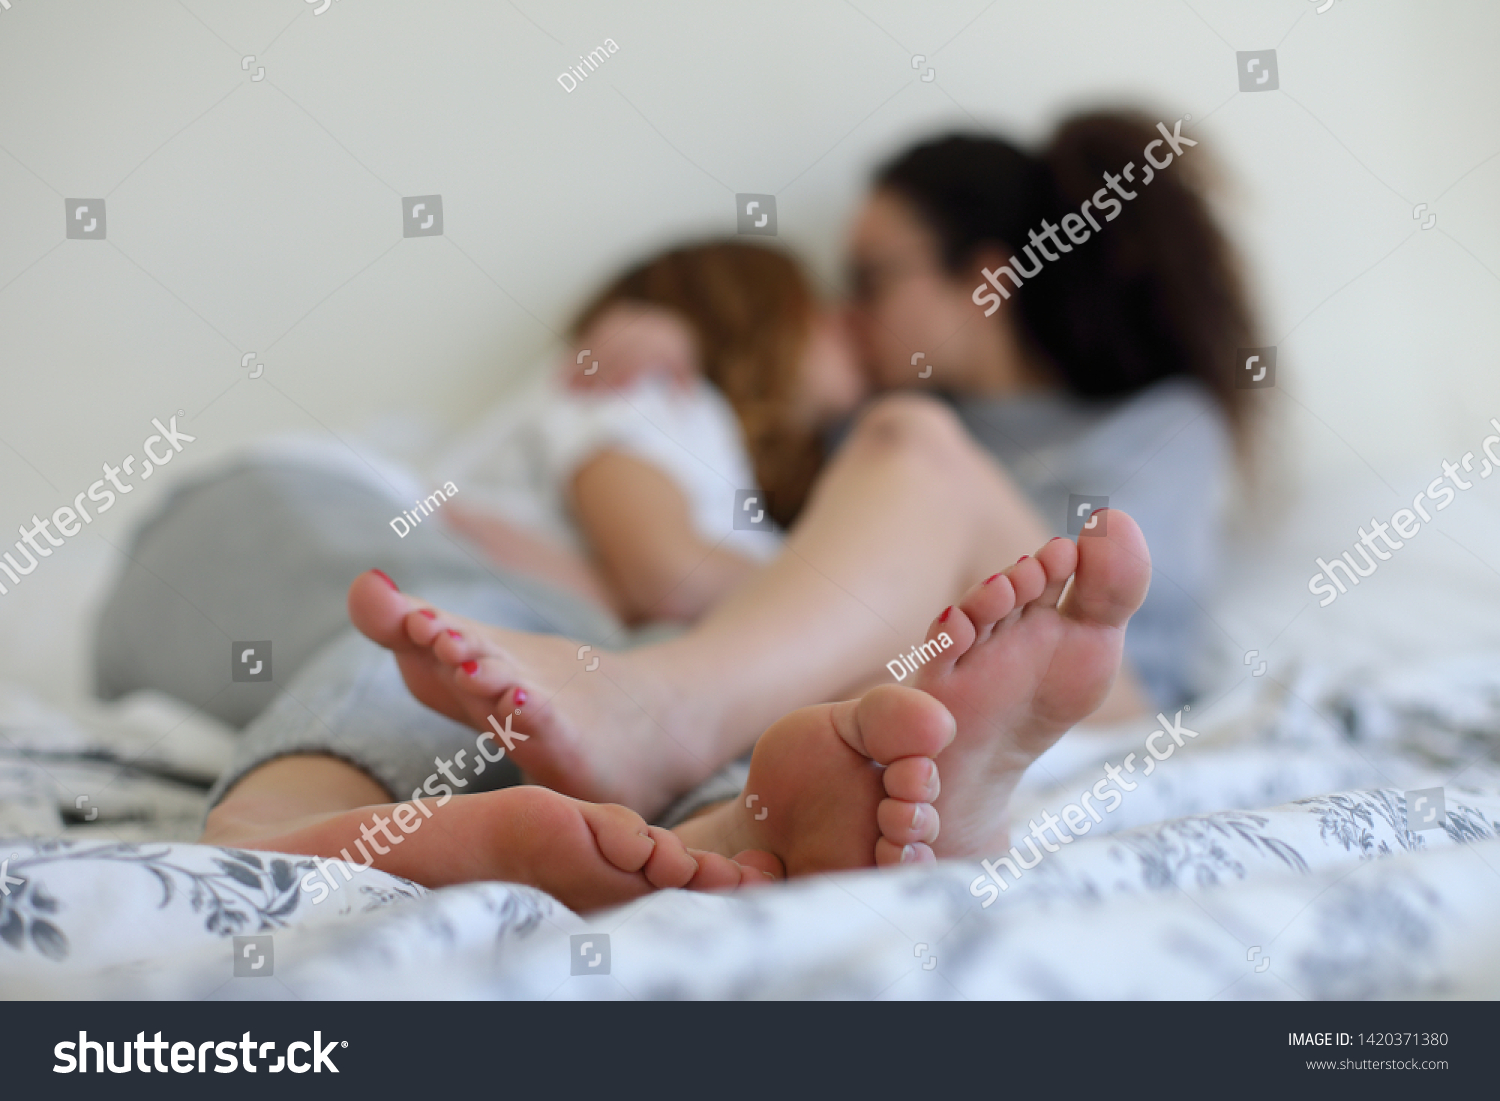 Feet lesbians and Lesbian Feet